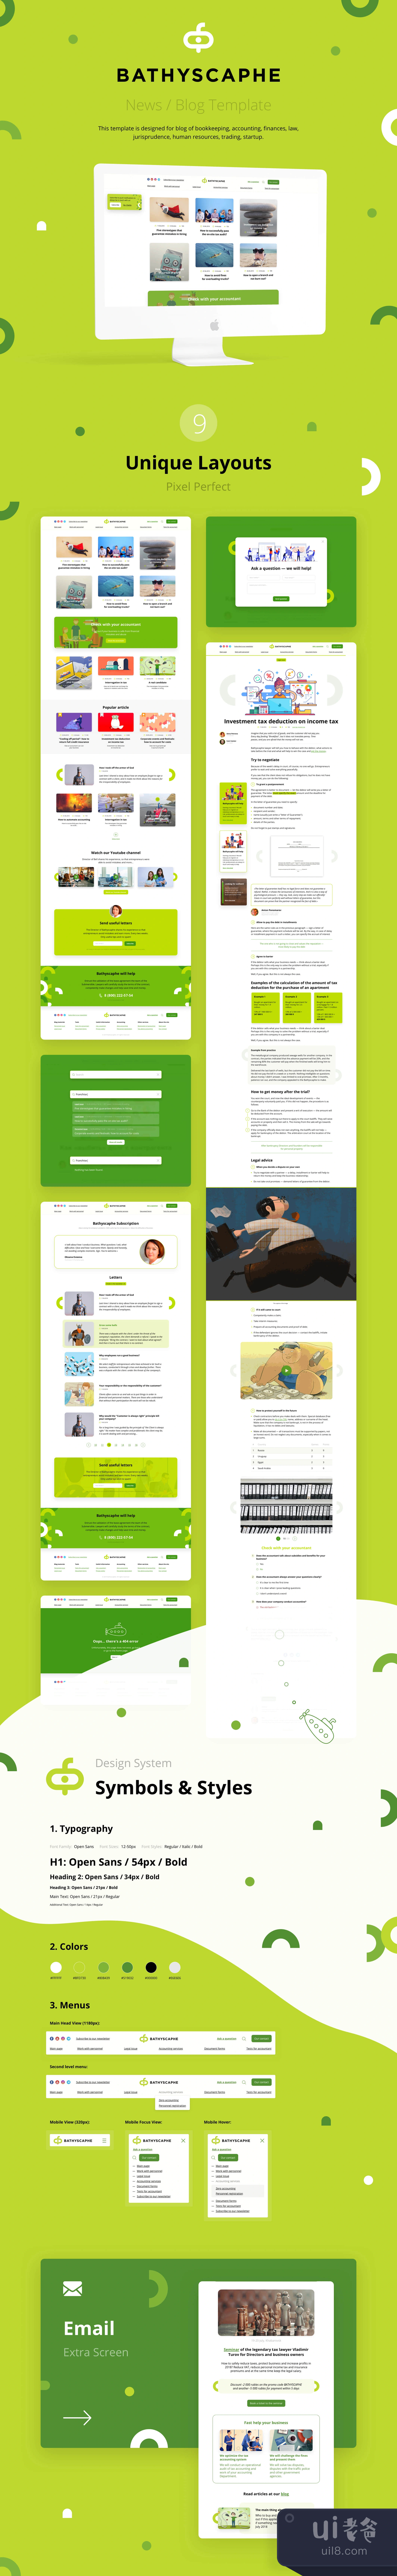 BATHYSCAPHE - 出版新闻博客模板 (BATHYSCAPHE — PublishingNe插图